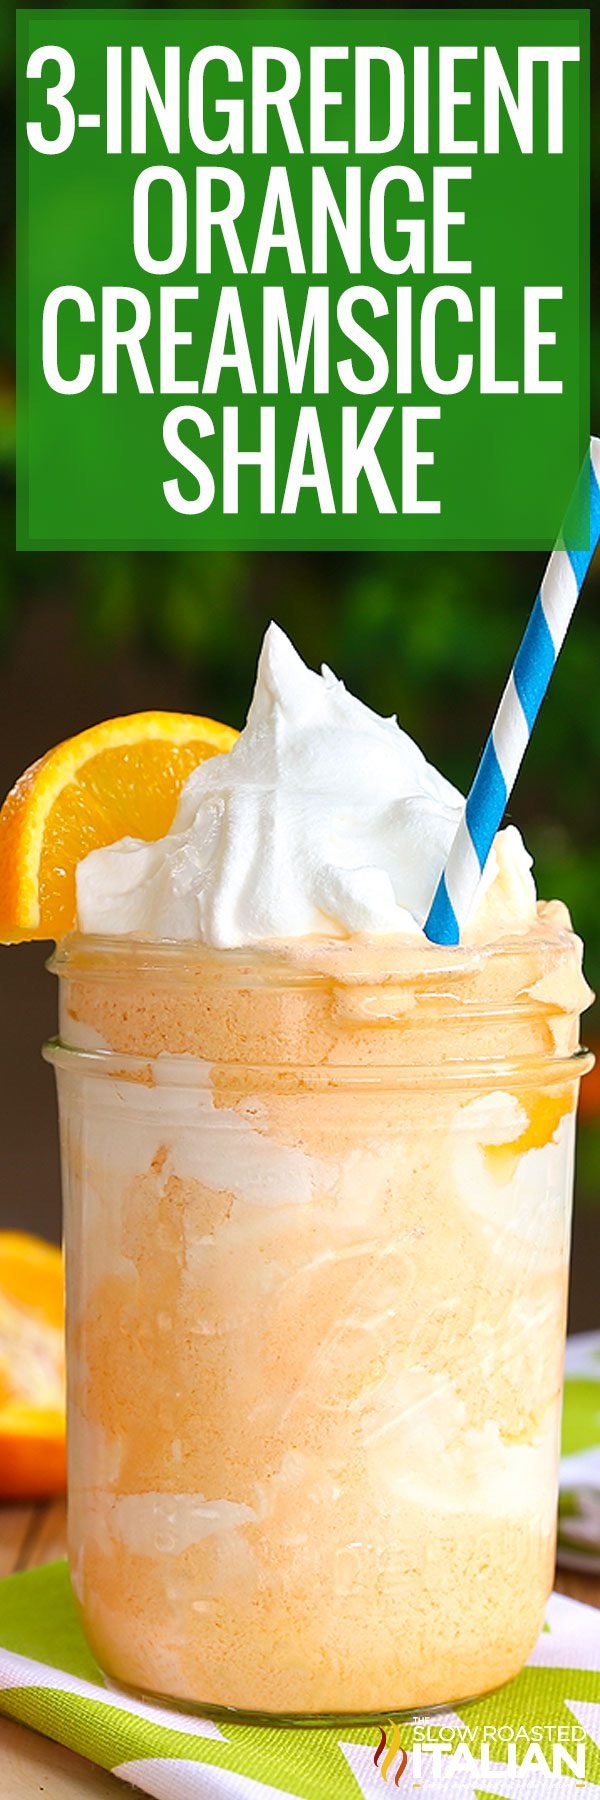 titled collage for 3-ingredient orange creamsicle shake